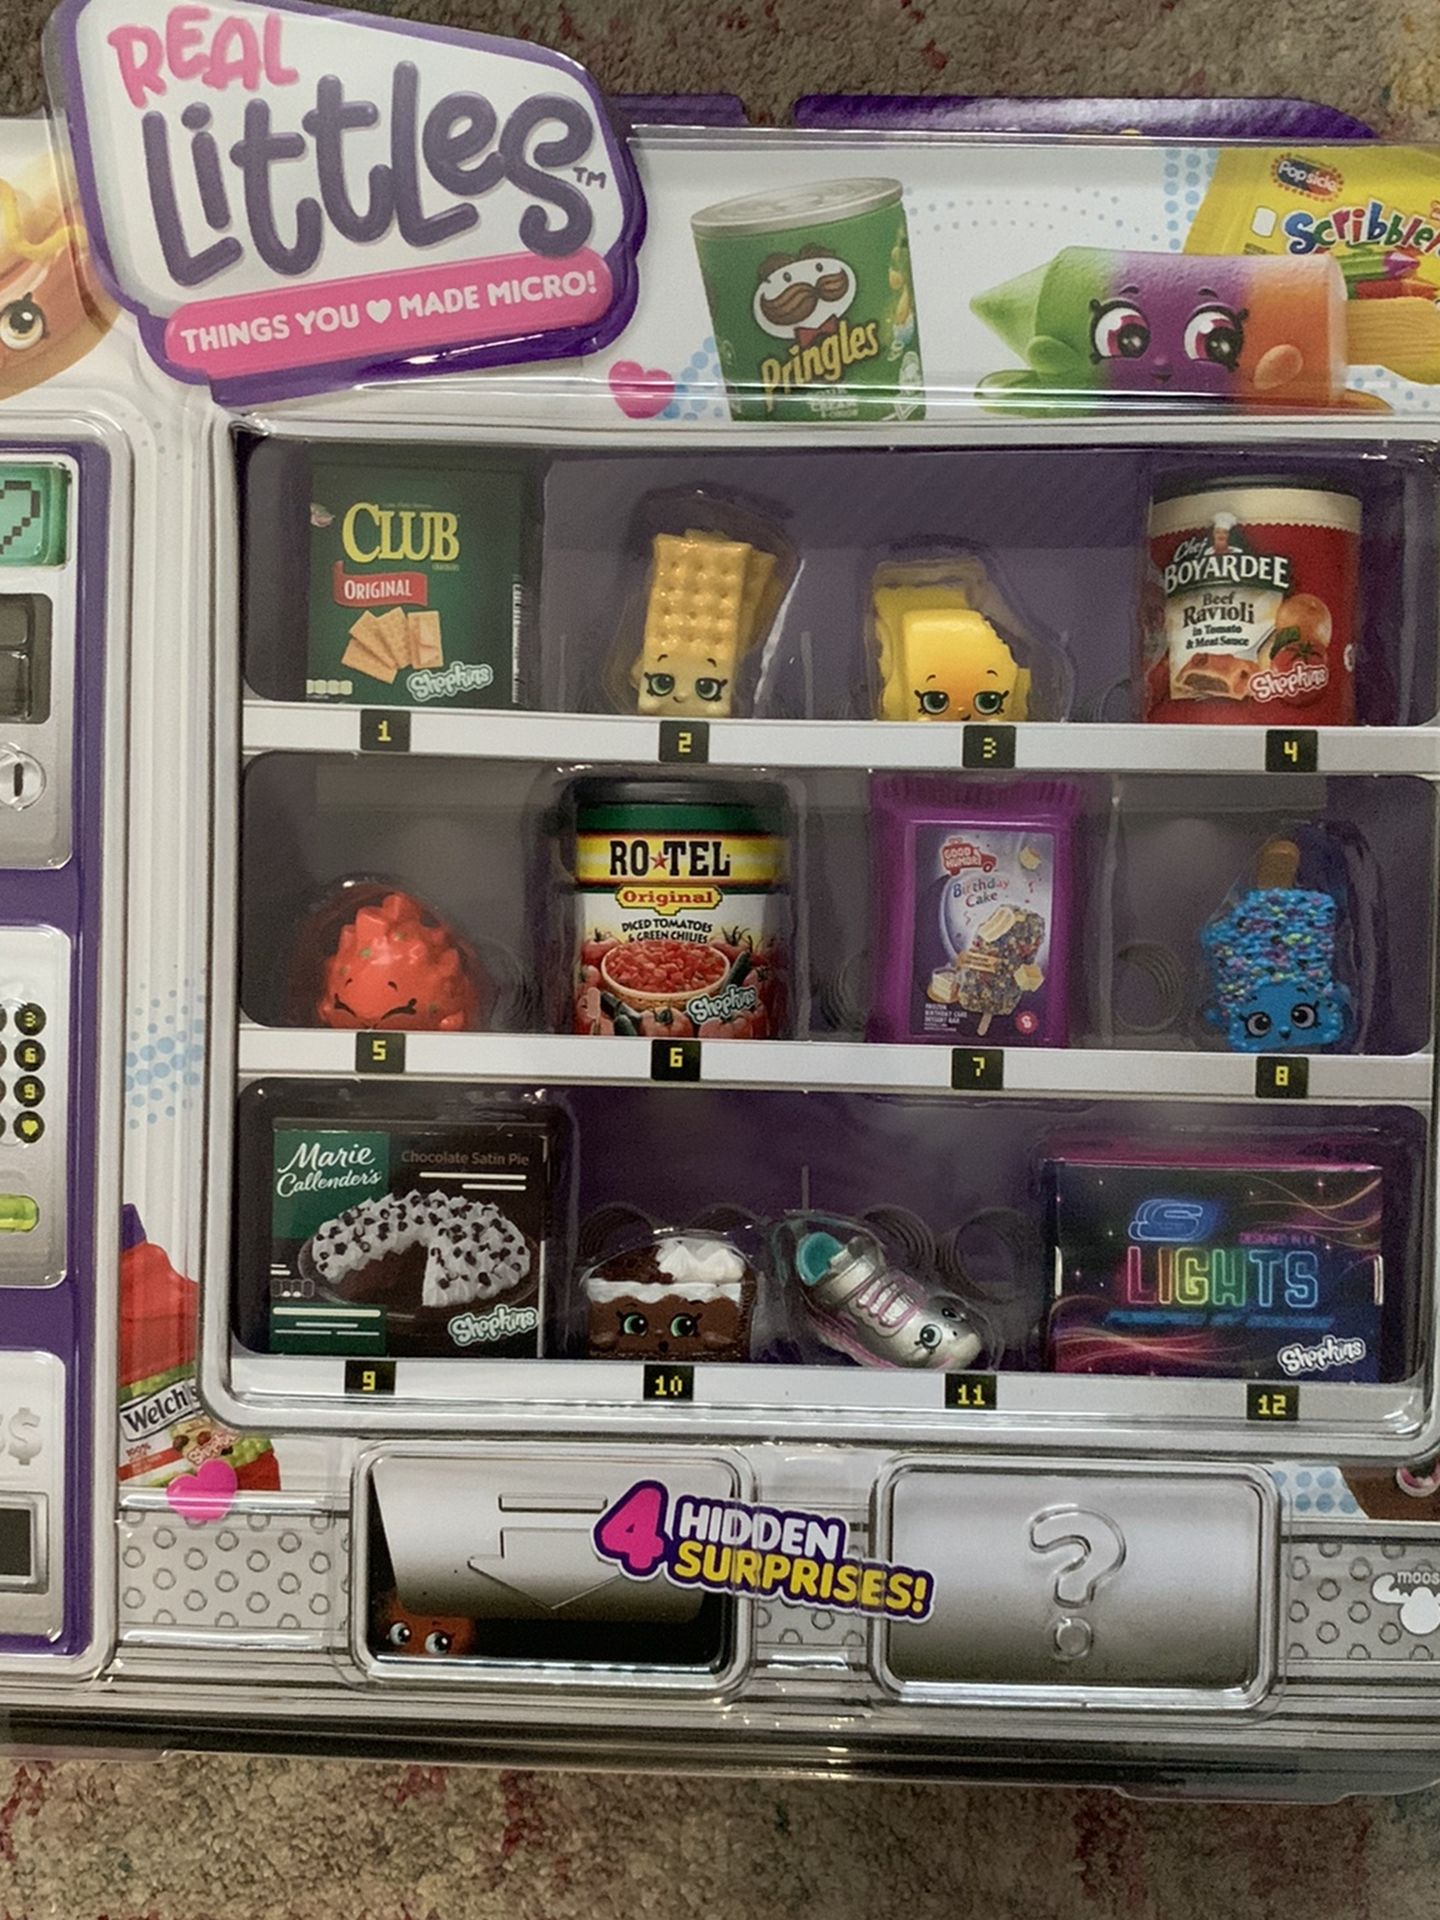 Shopkins Real Littles Vending Machine Pack New. Package has light shelf ware.